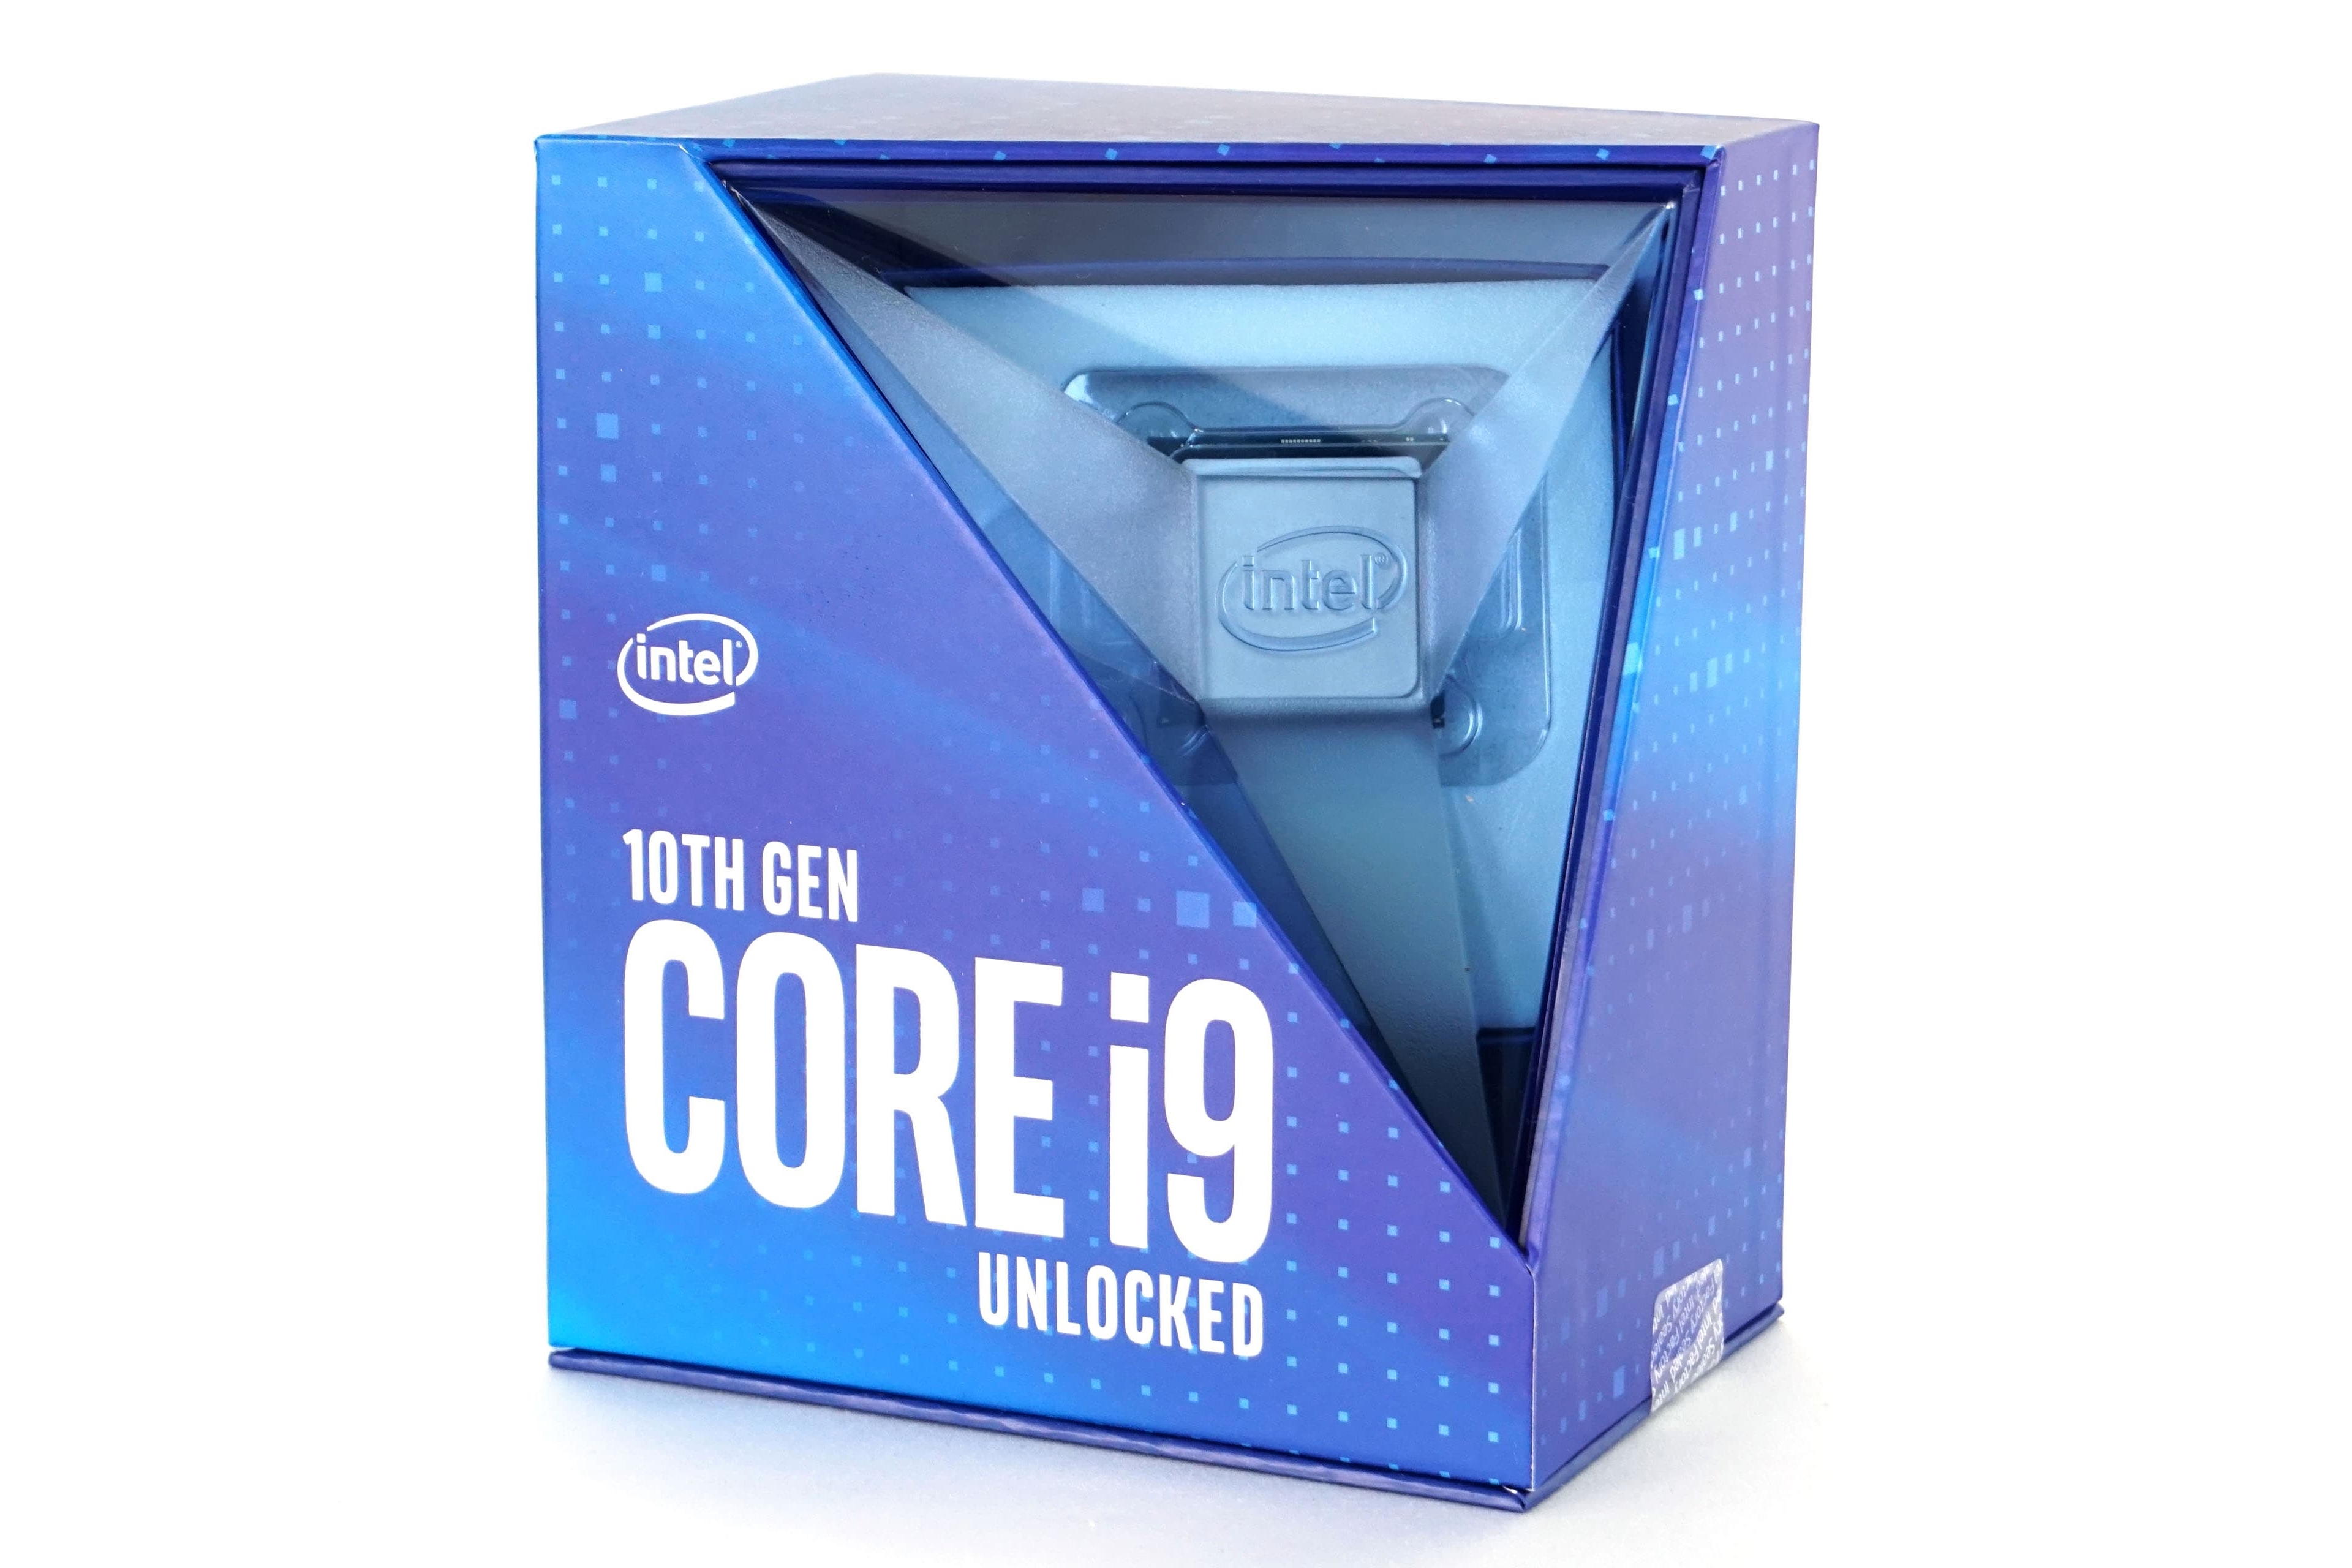 Intel Core I9 10900K May Guzzle Over 300W At Full Load –